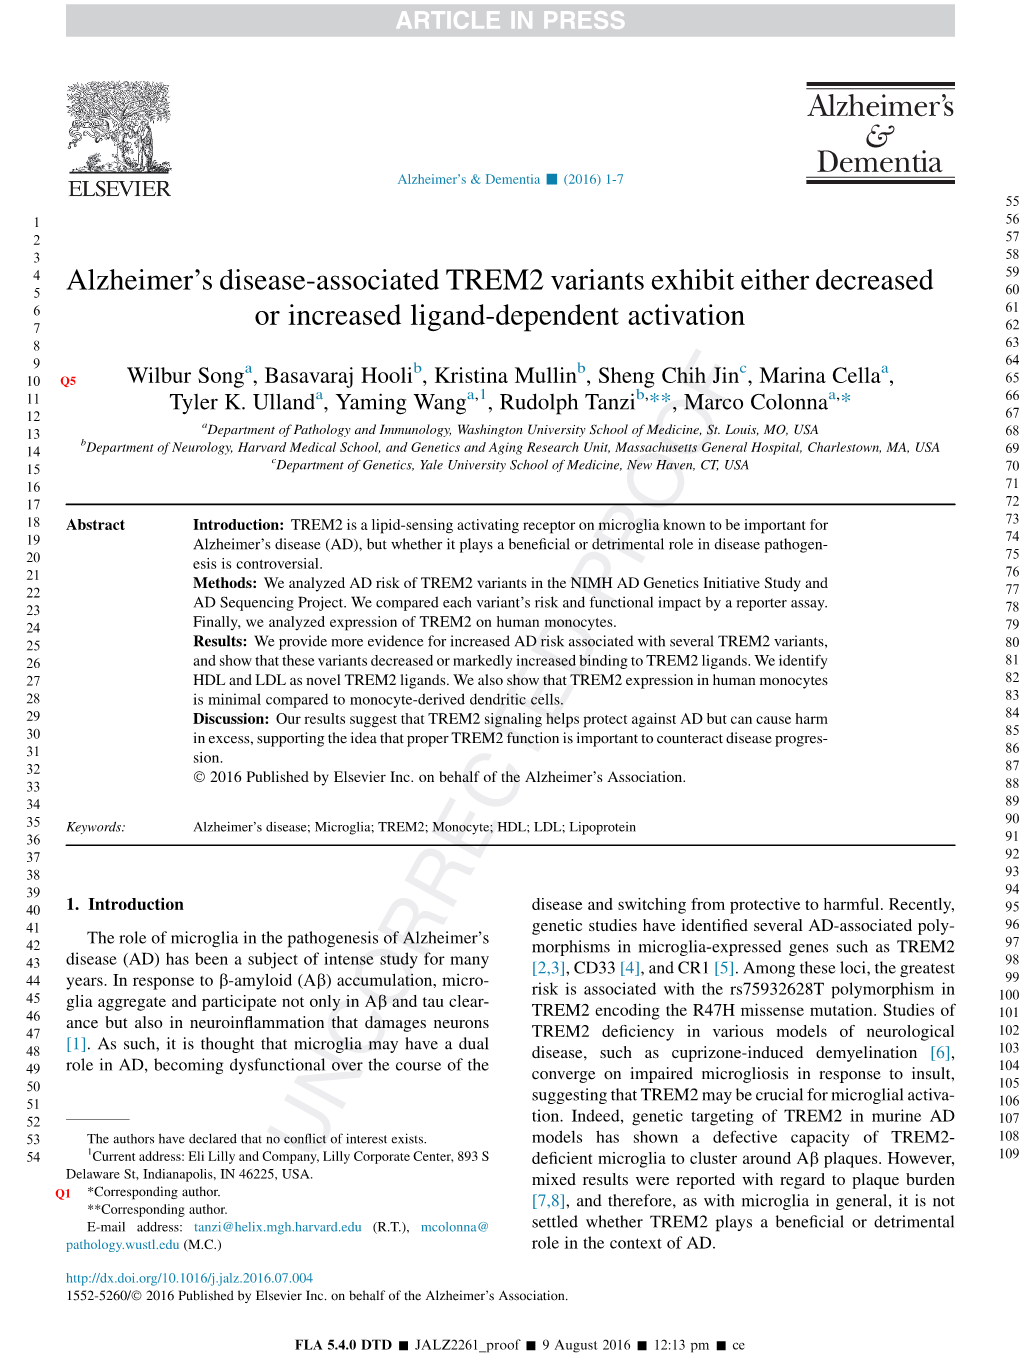 Alzheimer's Disease-Associated TREM2 Variants Exhibit Either